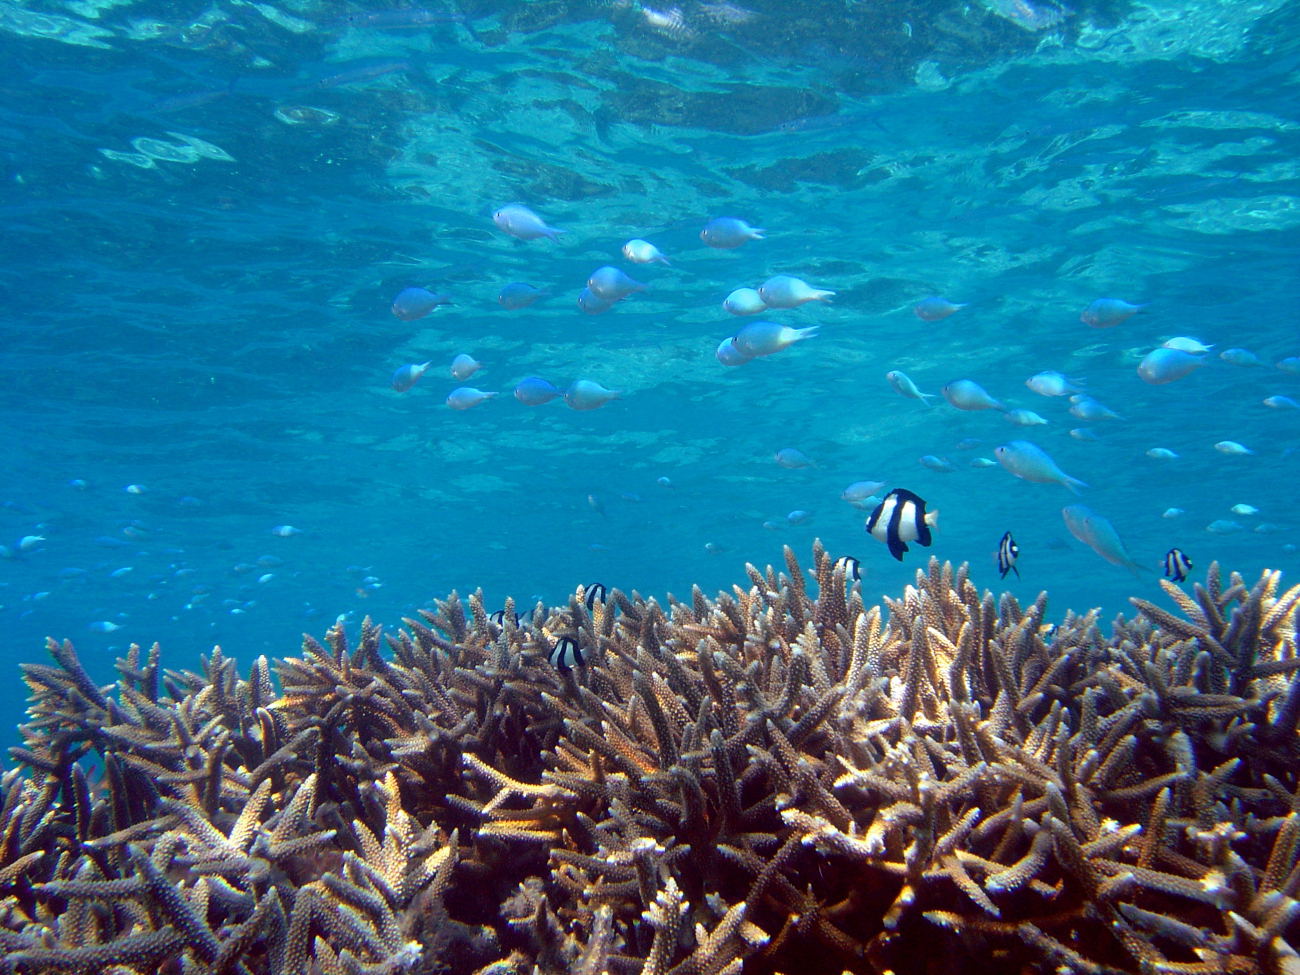 Reef scene with humbug damselfish (Dascyllus aruanus) just abovecoral and unknown type of schooling damselfish higher in water column